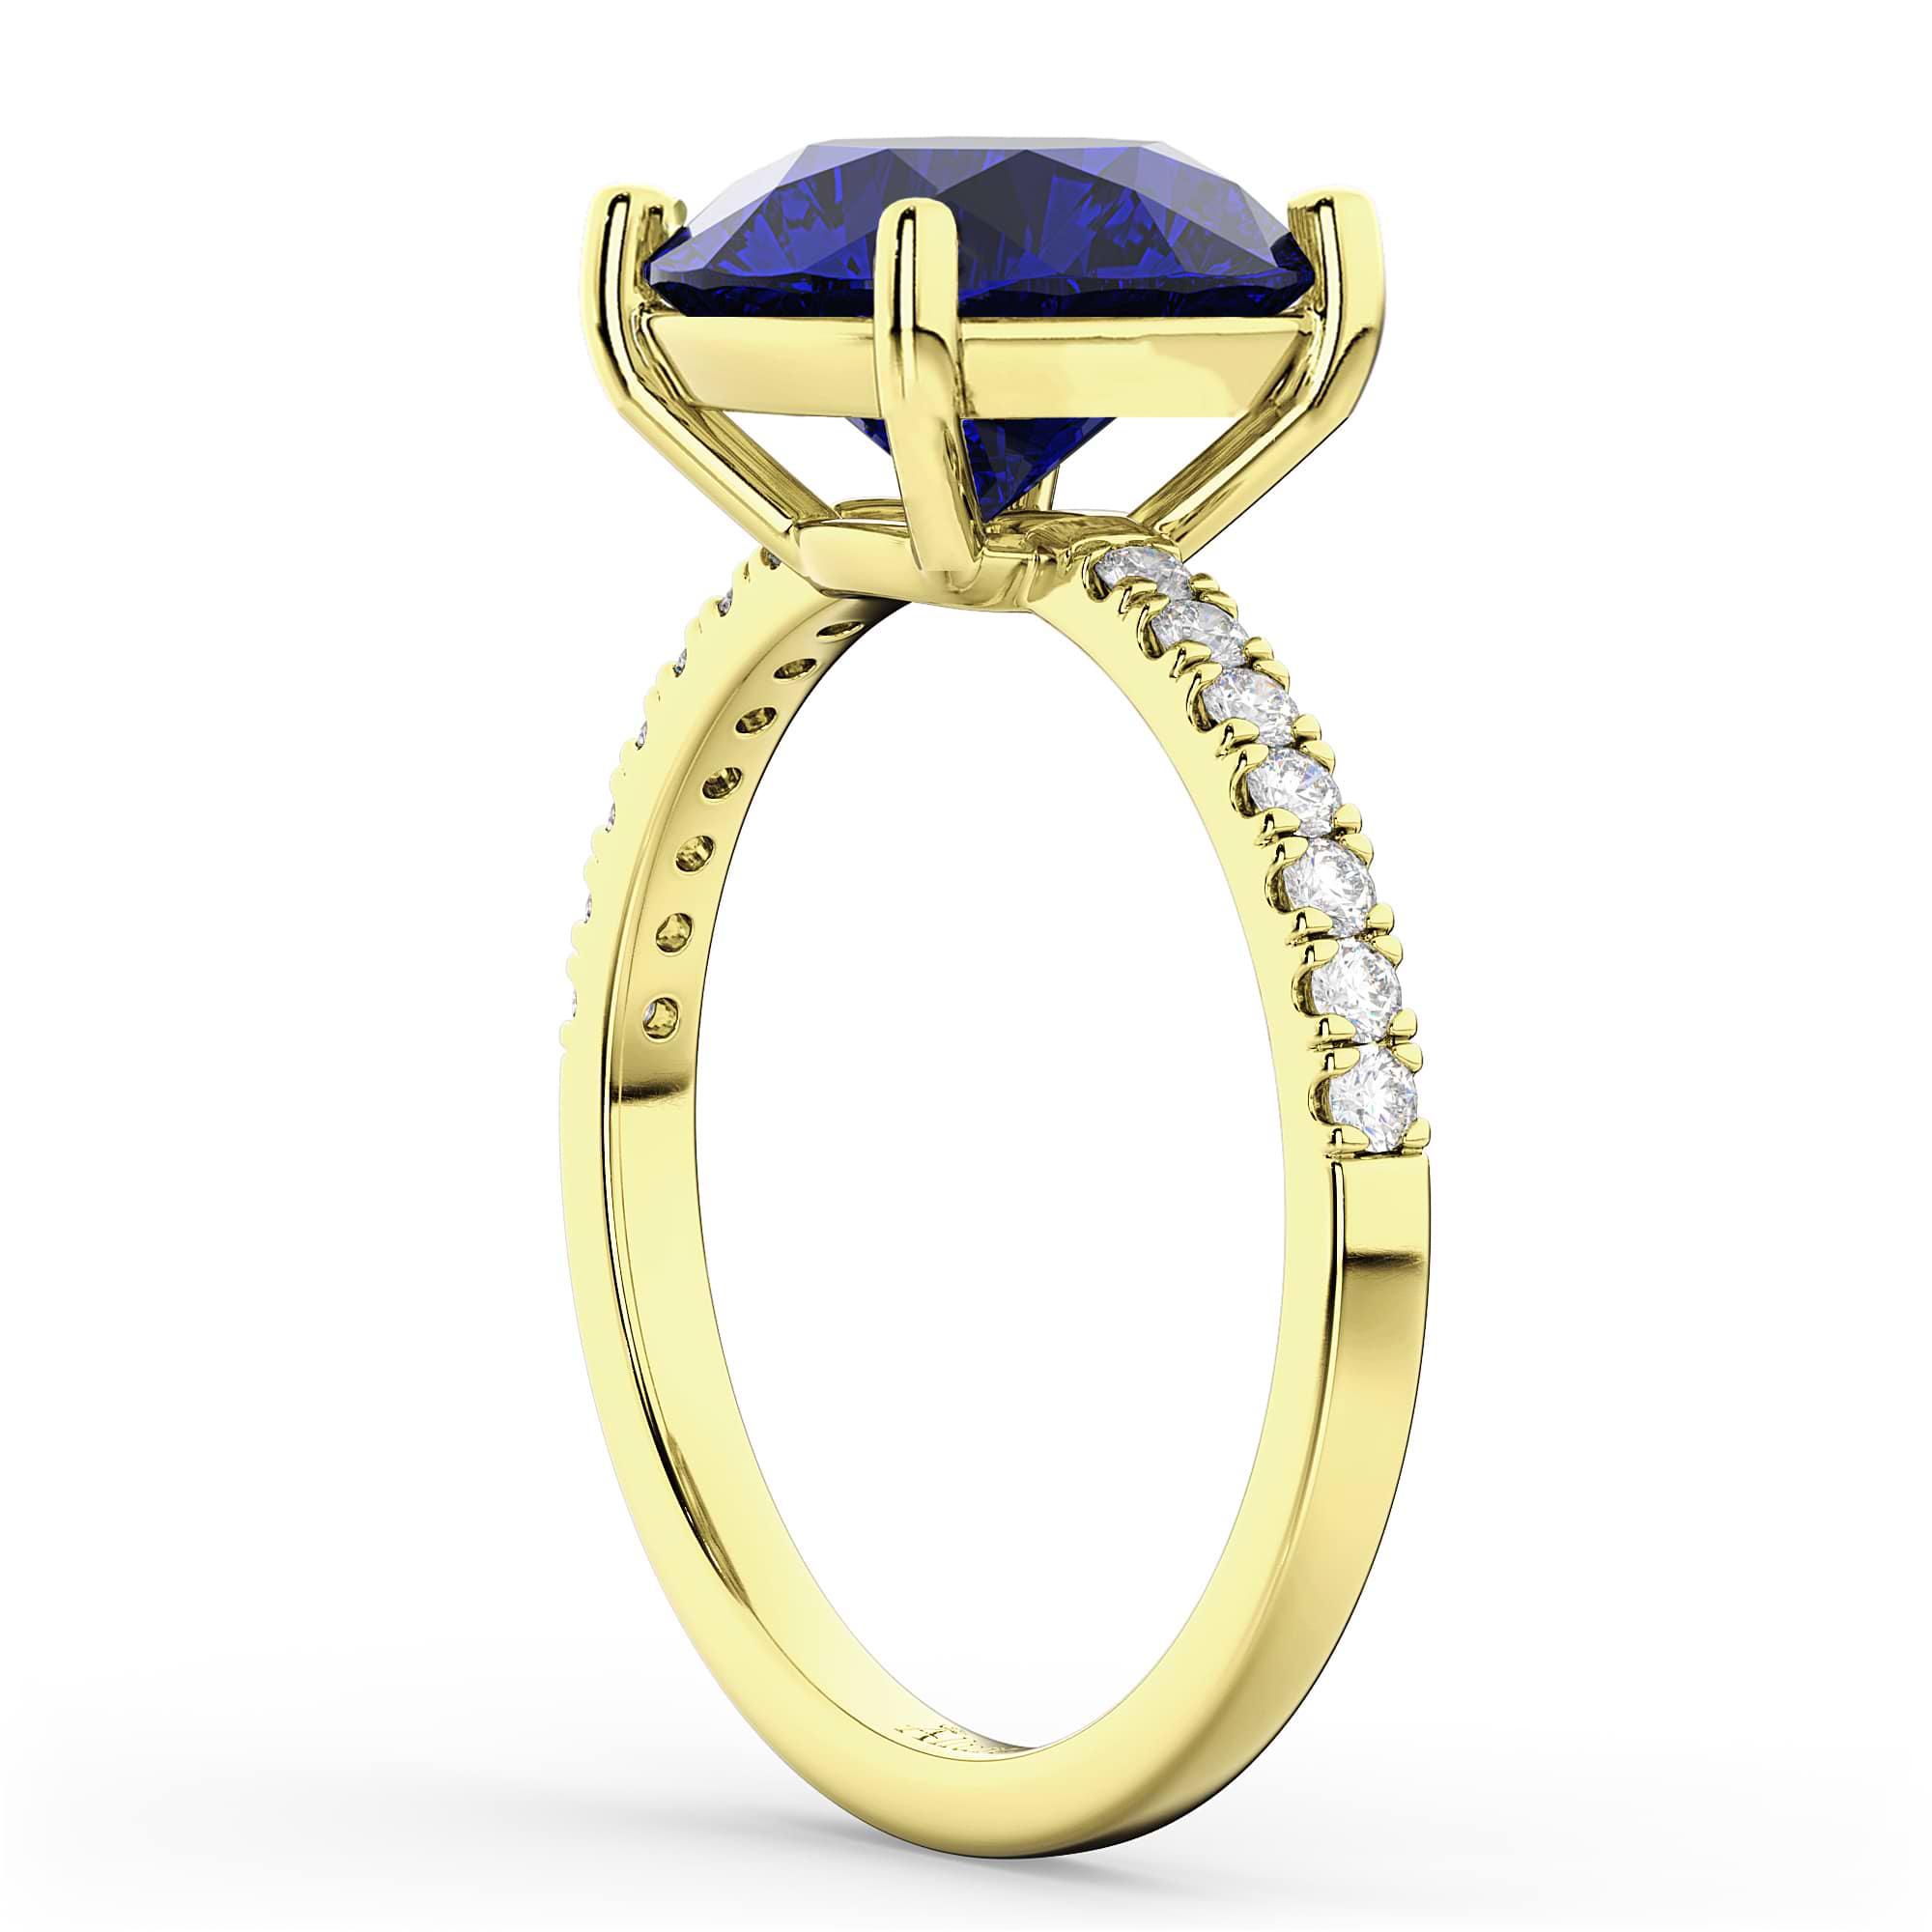 Blue Sapphire & Diamond Engagement Ring 14K Yellow Gold 2.51ct